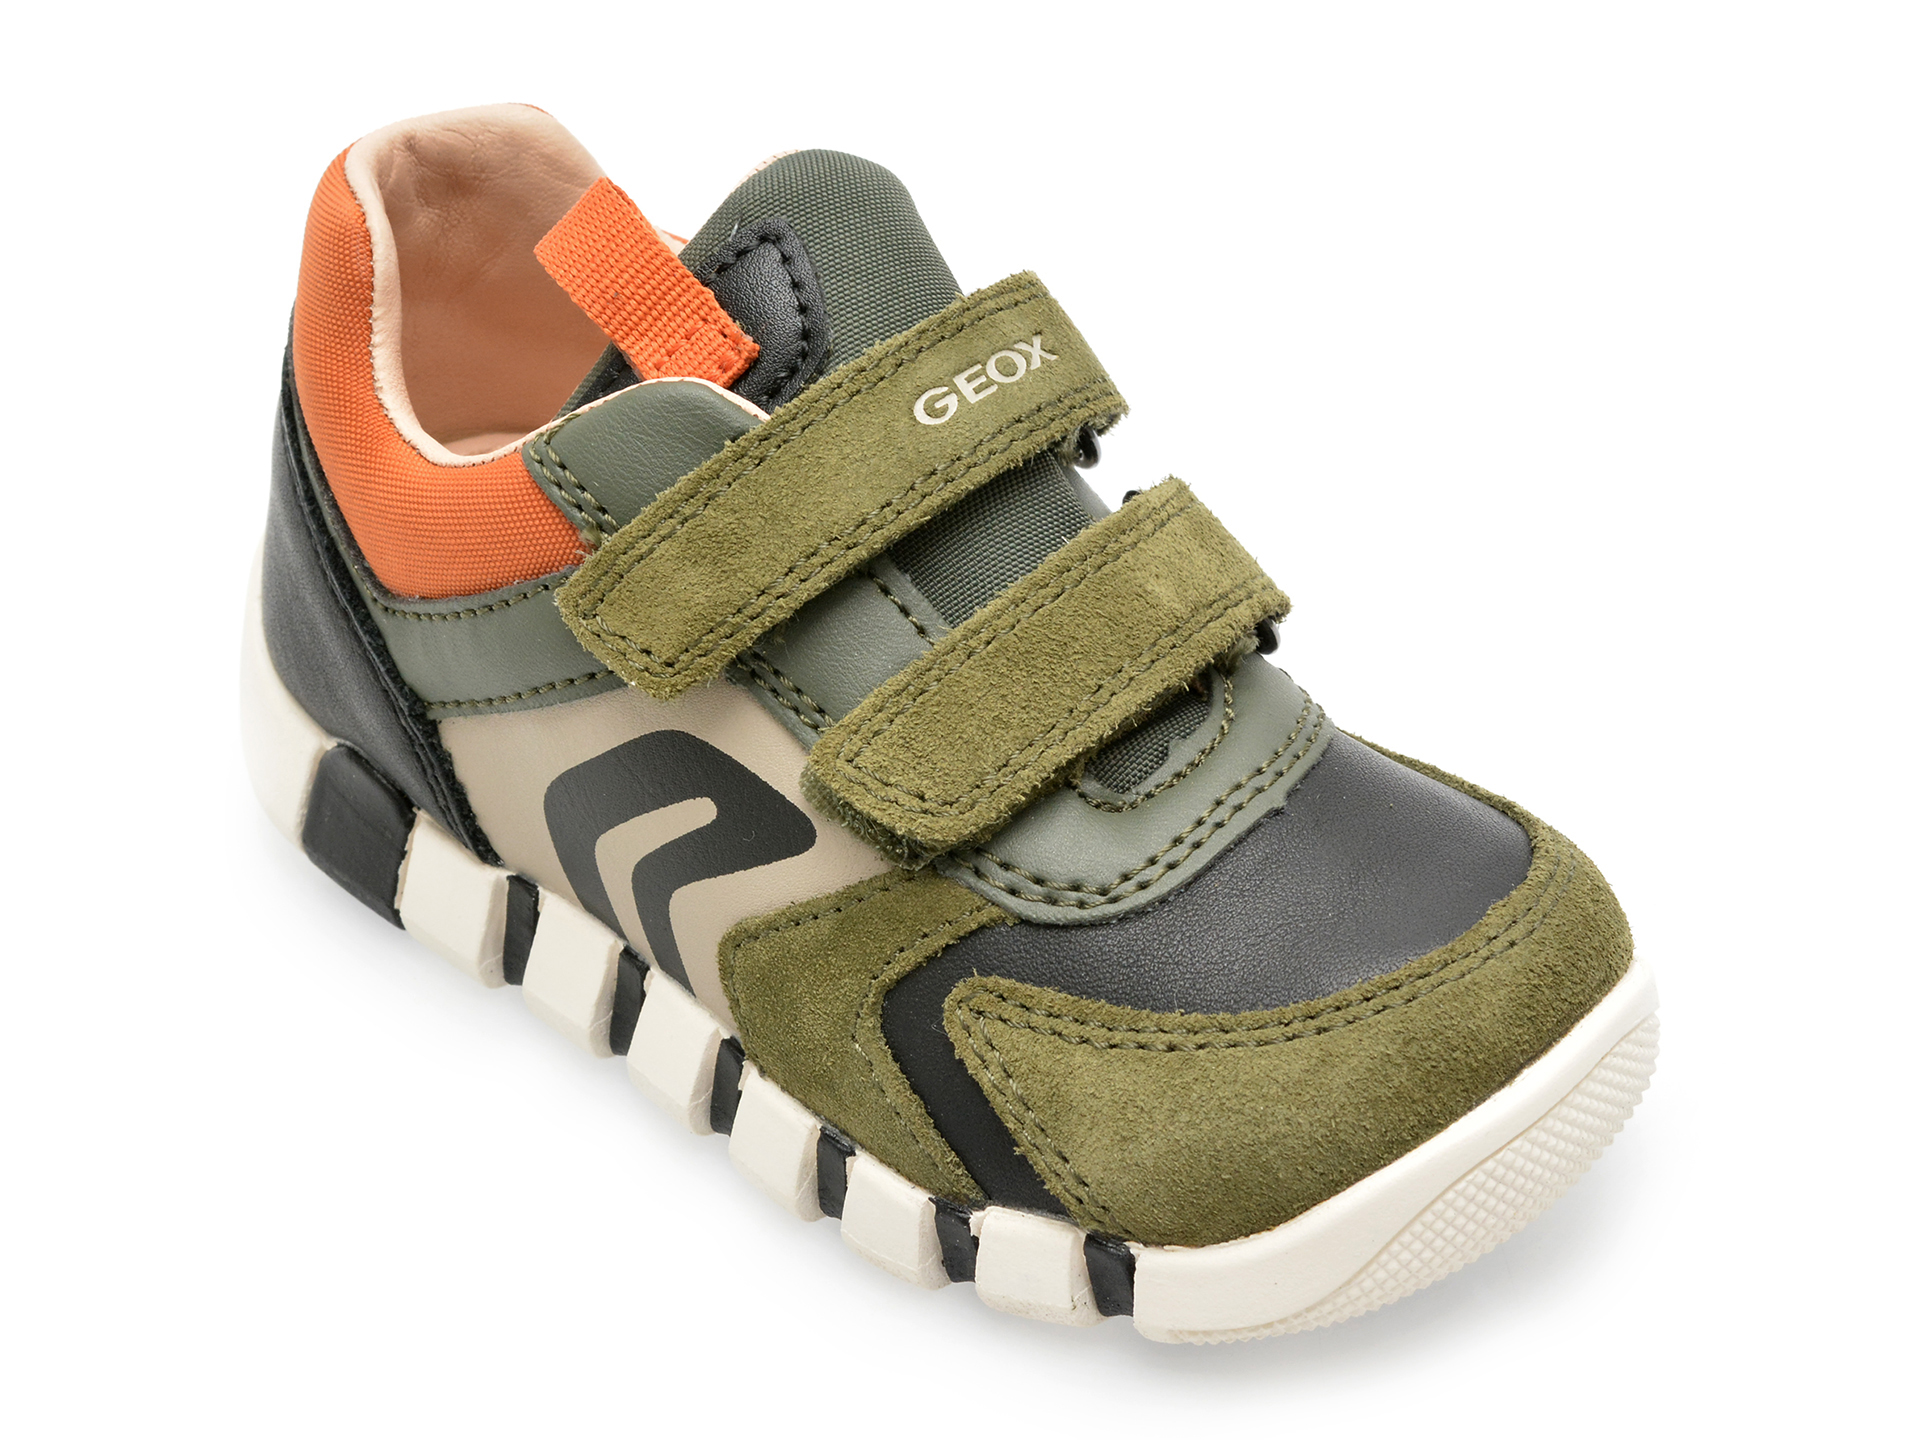 Pantofi GEOX verzi, B3555D, din piele naturala /copii/incaltaminte